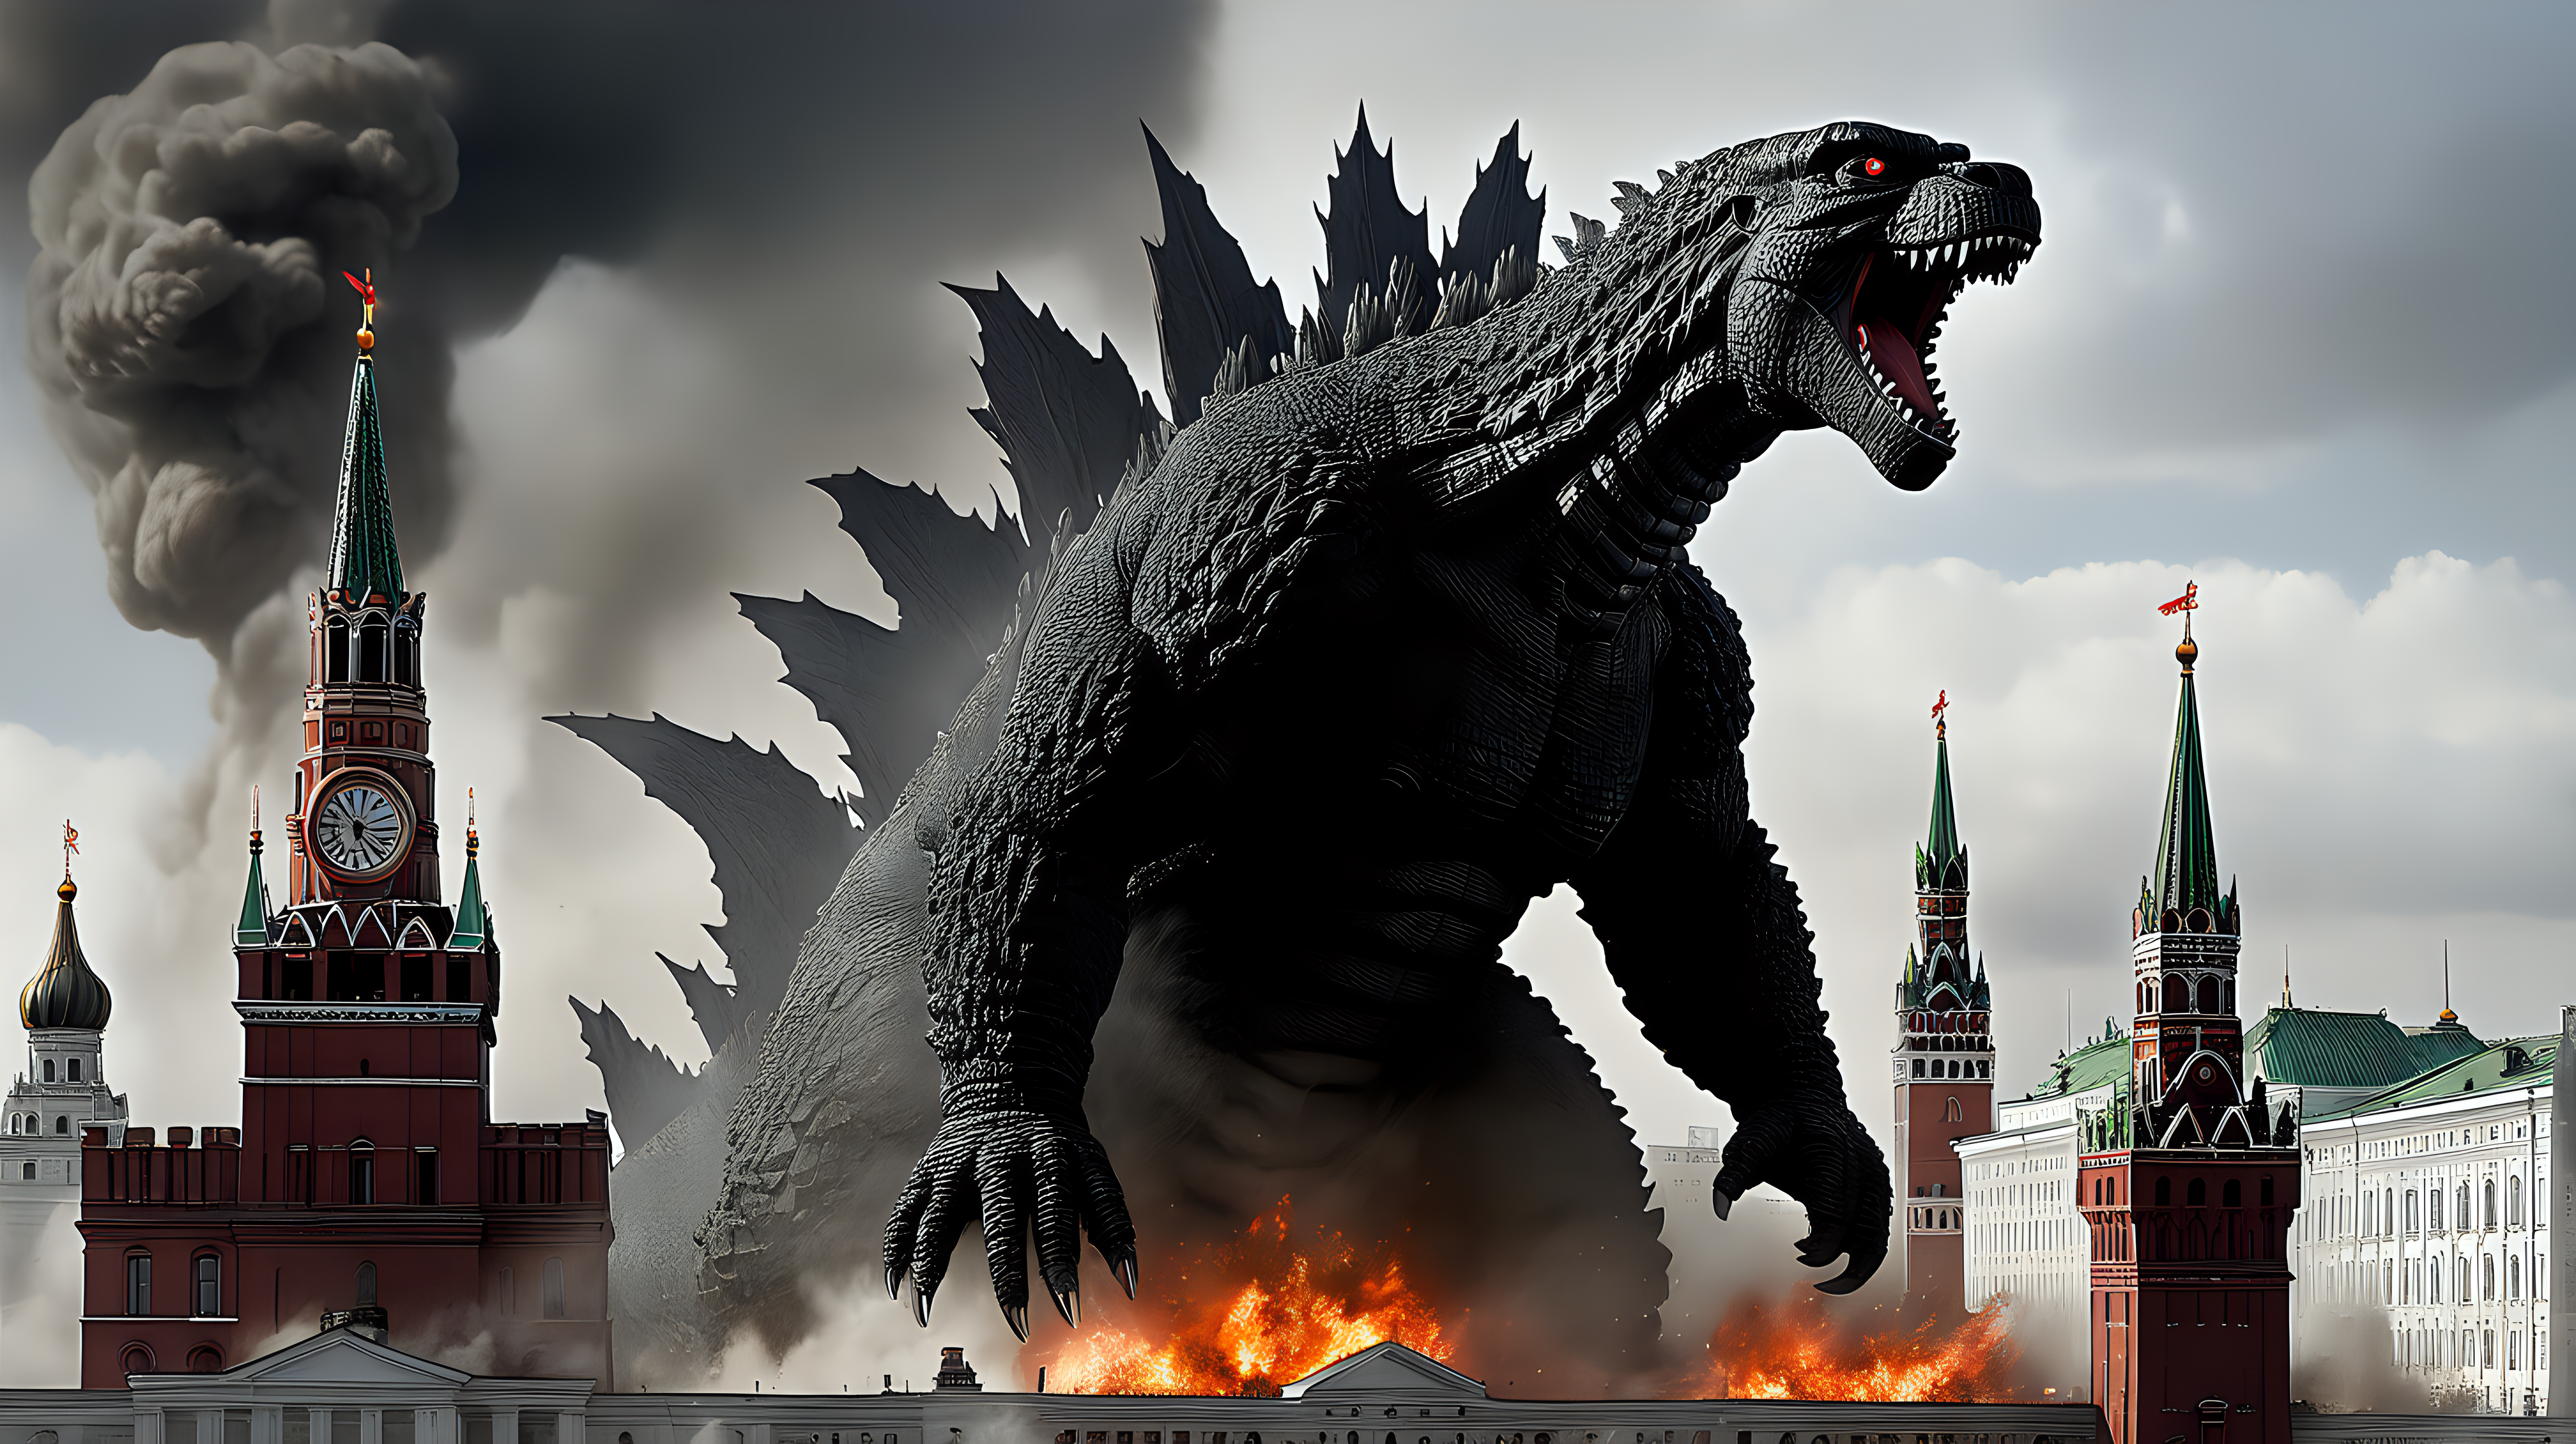 Godzilla destroying the Kremlin